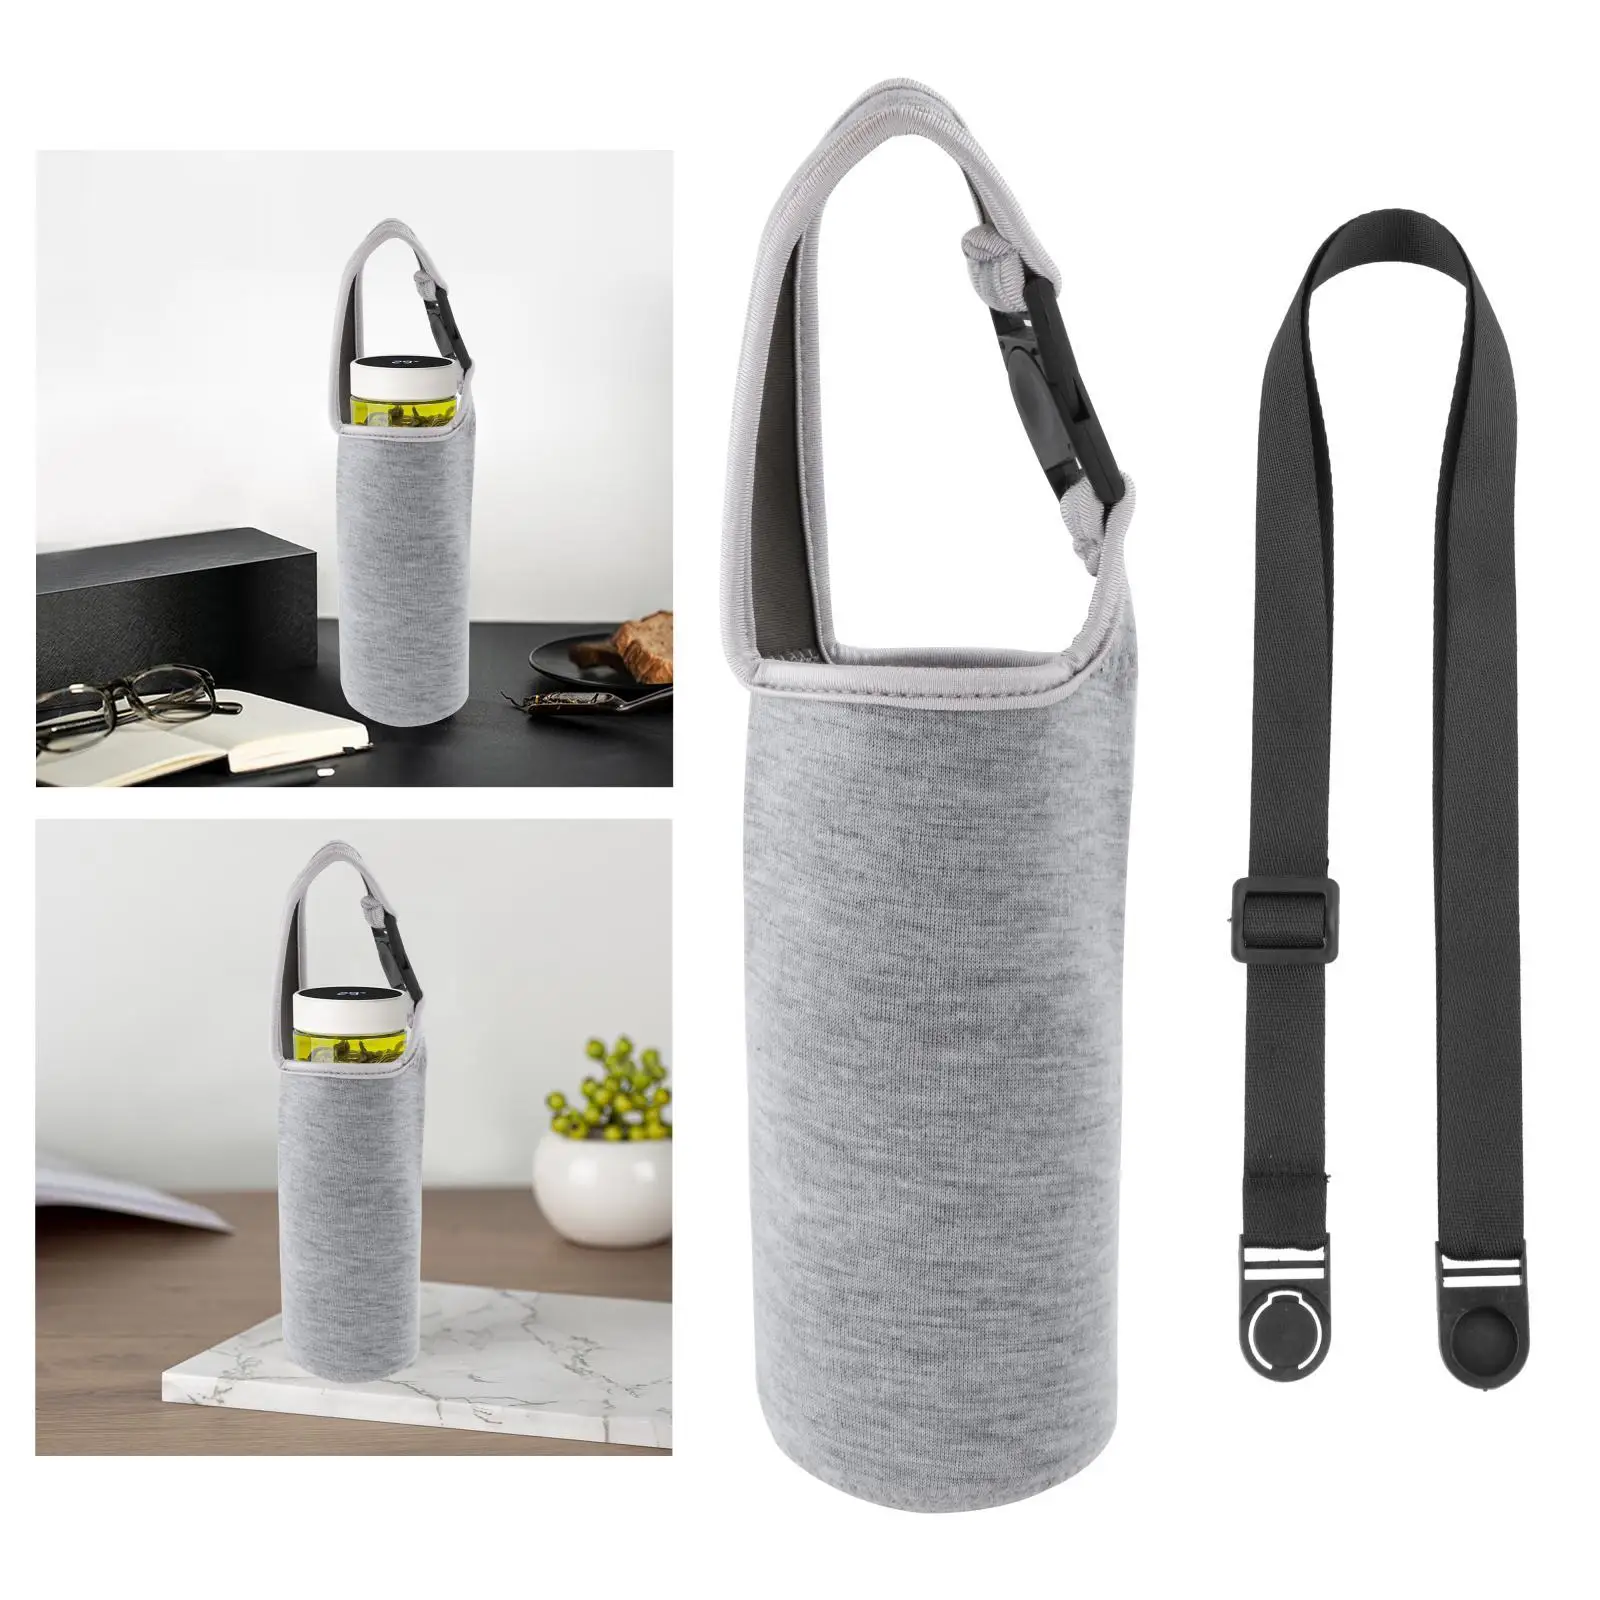 400-500ml Water Bottle Sling Case Bag with Adjustable Shoulder Strap Insulated for Running Sport Travel Plastic Bottles Women